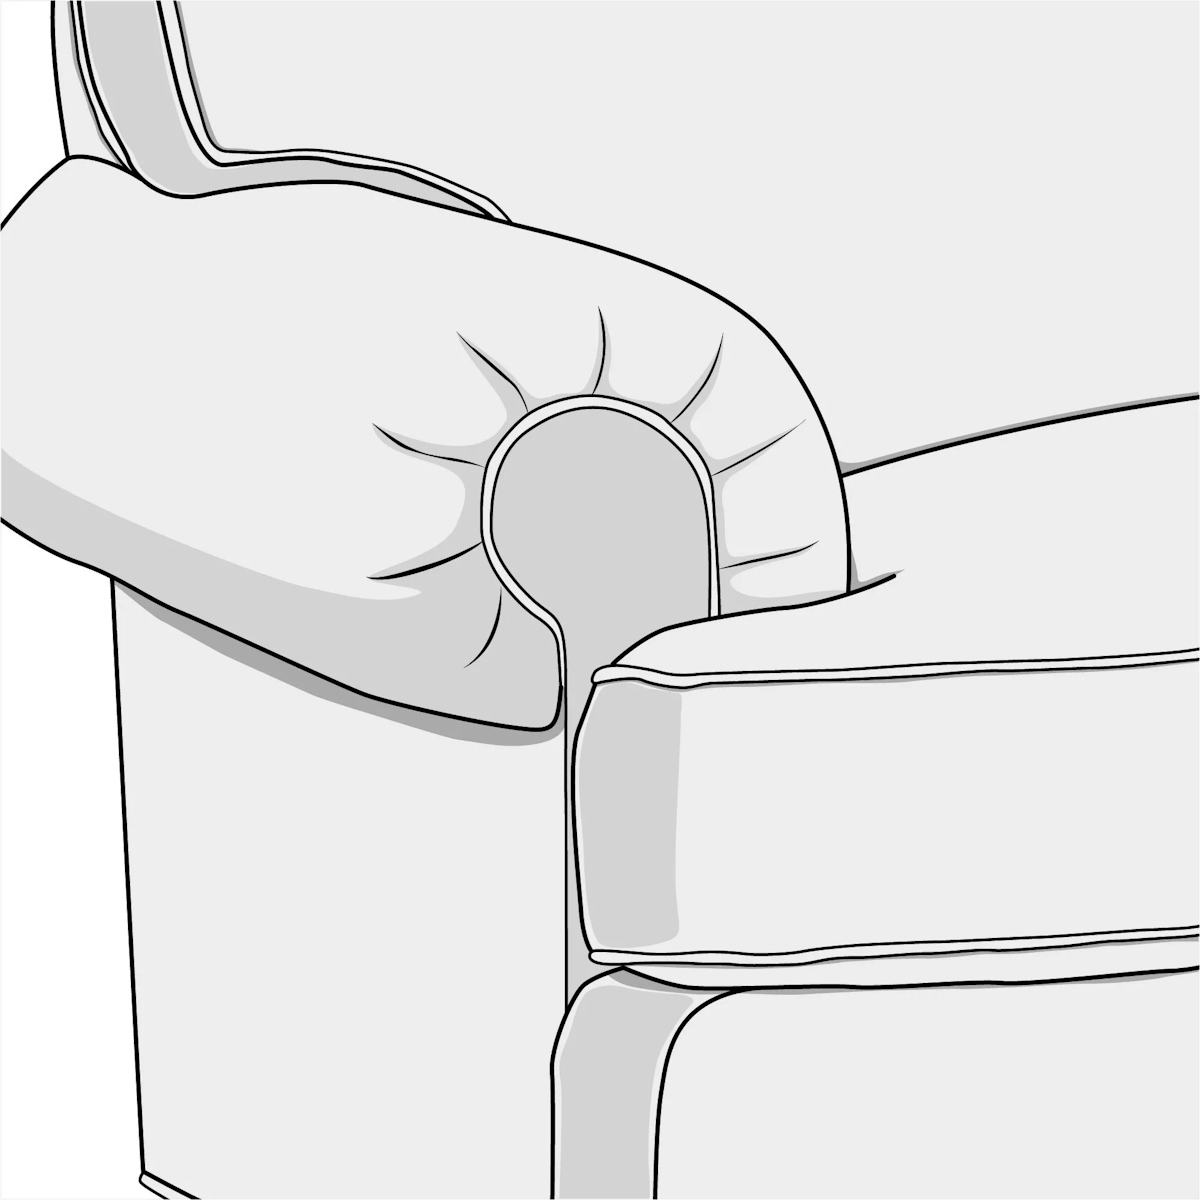 Illustration of lawson arm style sofa